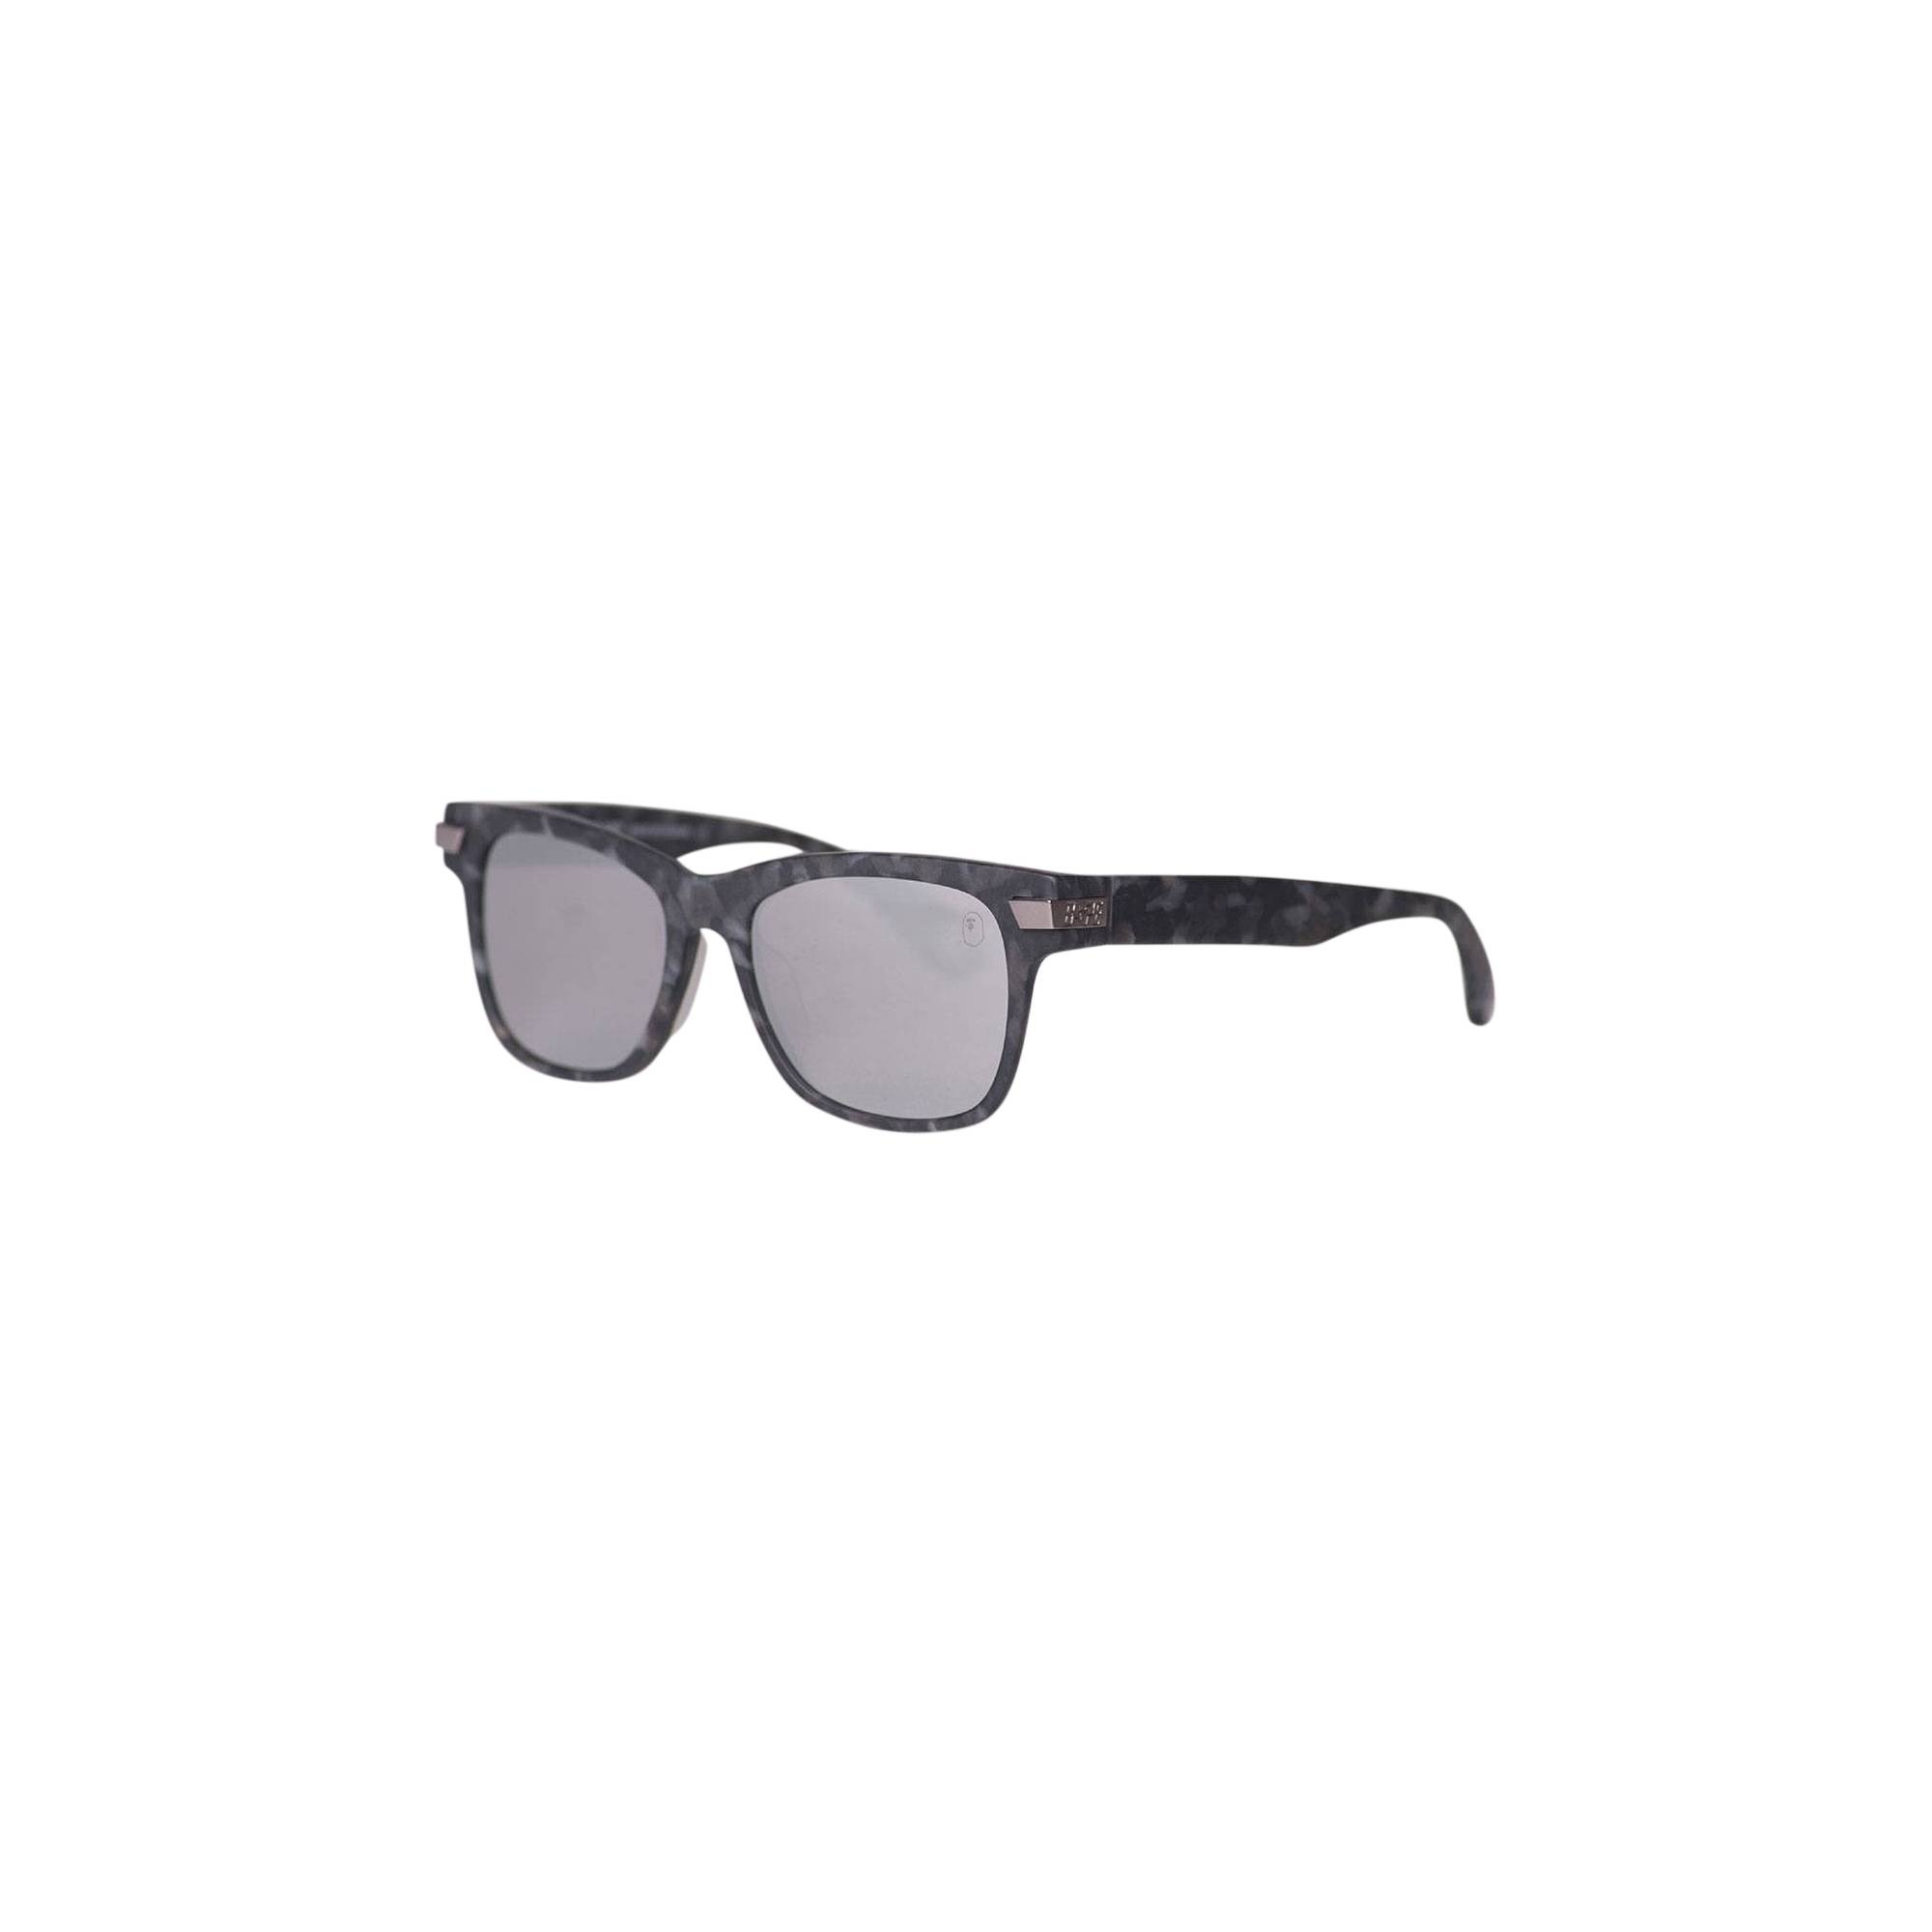 BAPE Sunglasses 'Grey' - 1